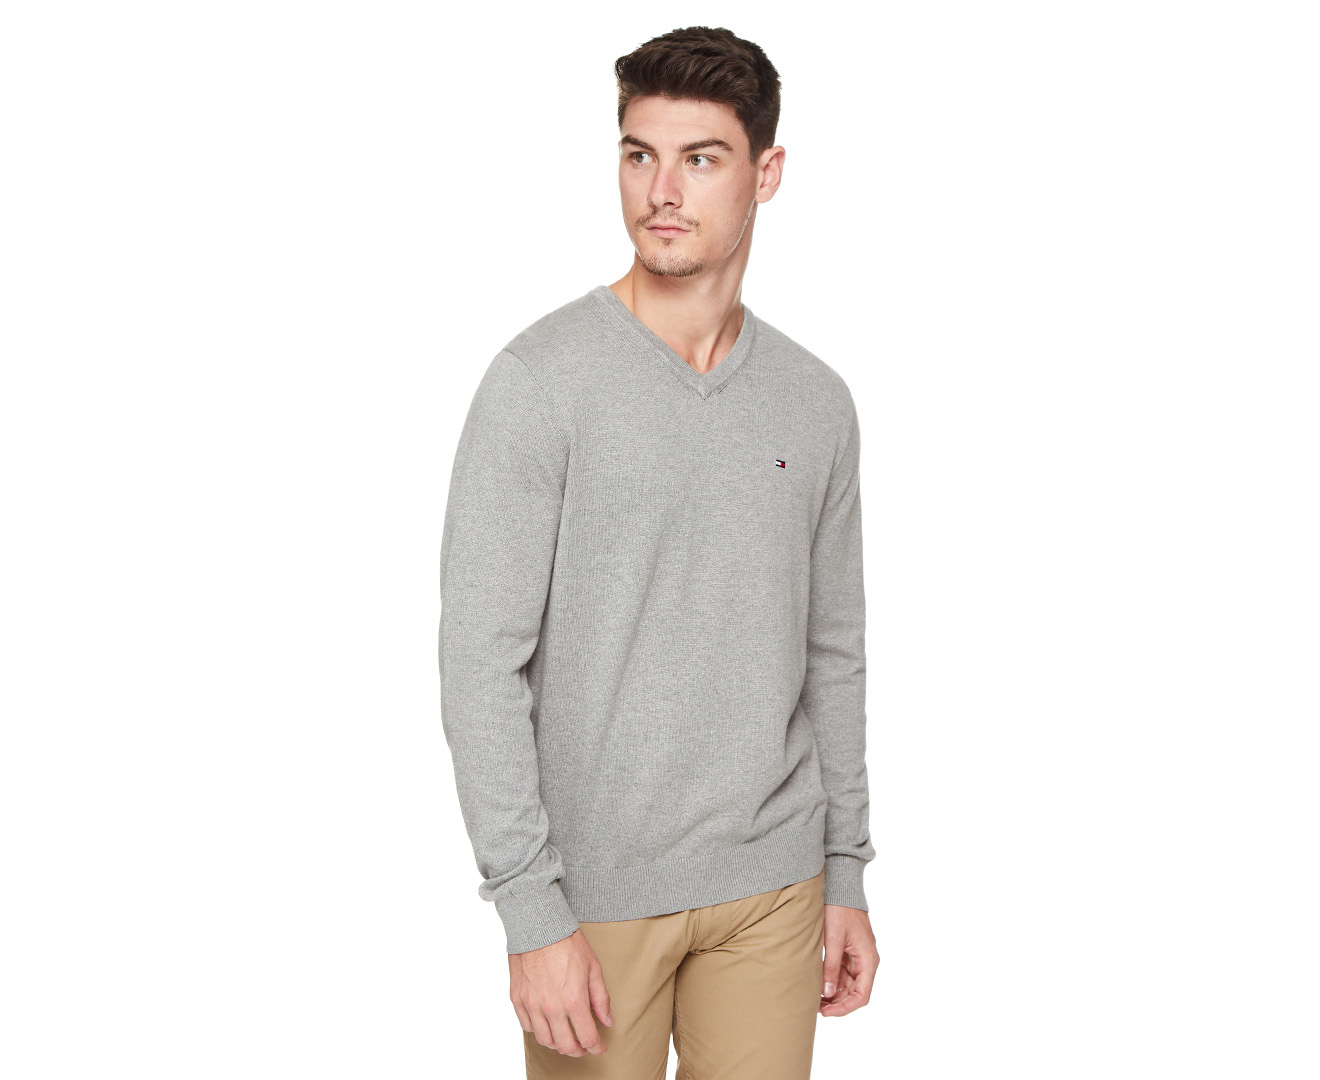 Tommy Hilfiger Men's Pacific V-Neck Sweater - Grey Heather | Catch.com.au